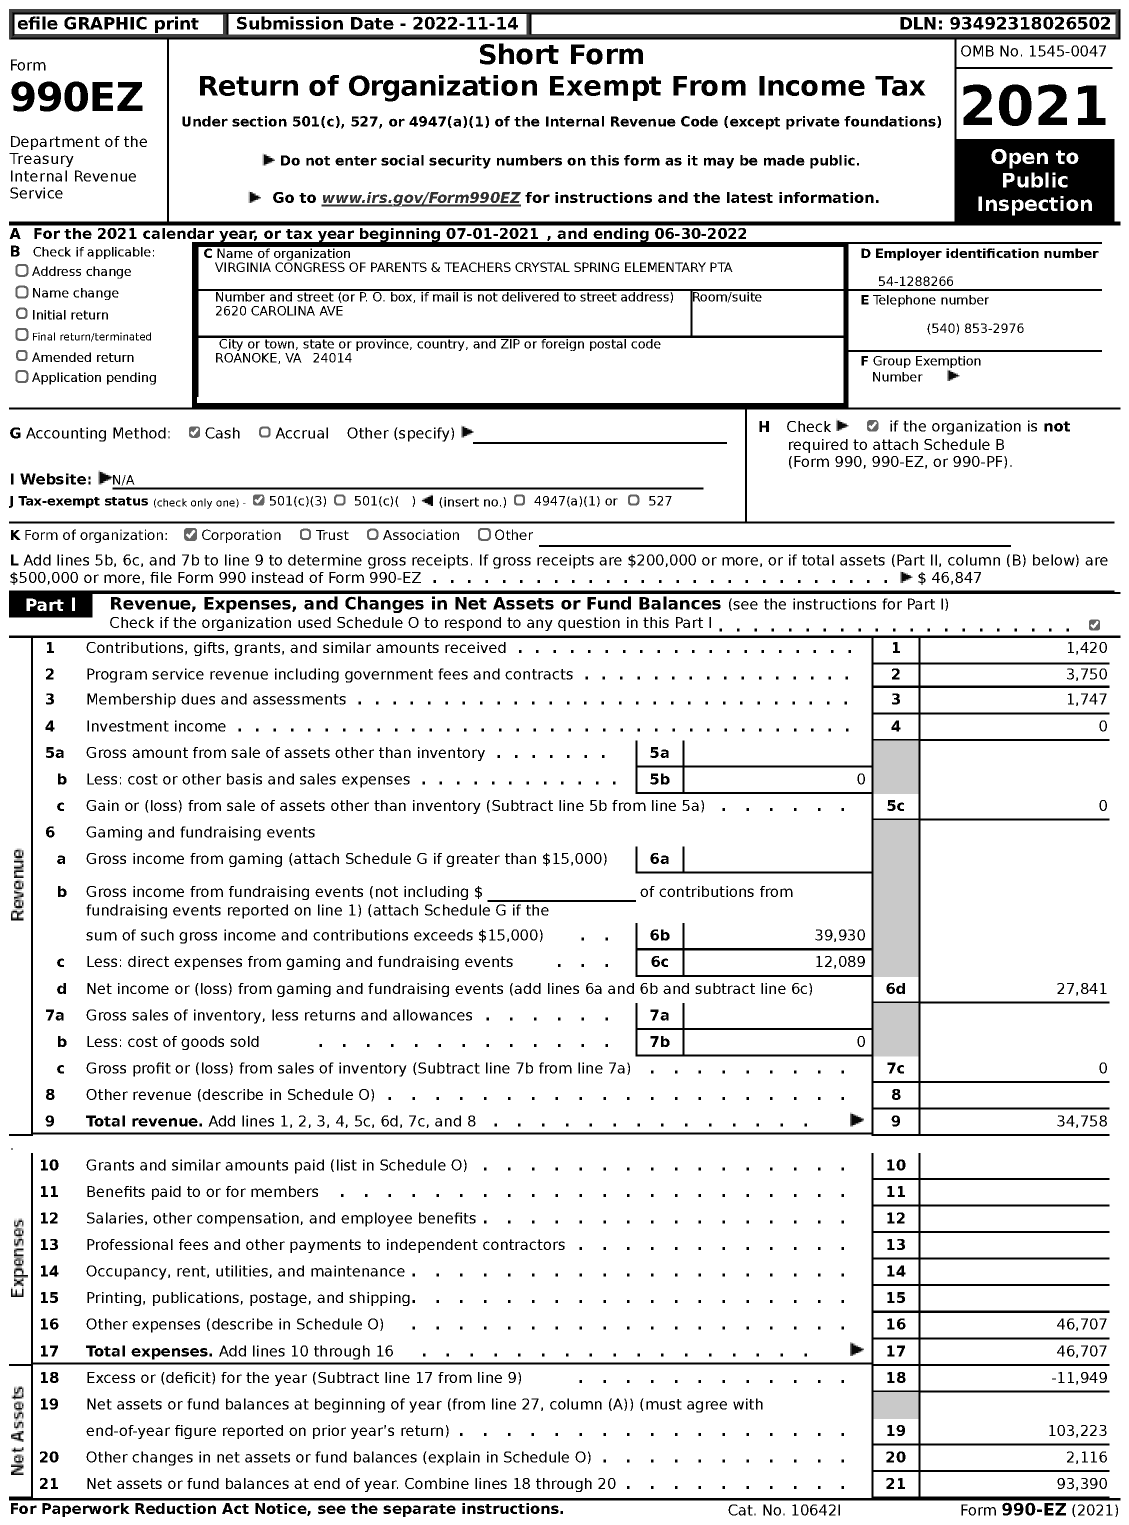 Image of first page of 2021 Form 990EZ for Virginia PTA - Crystal Spring Elem PTA